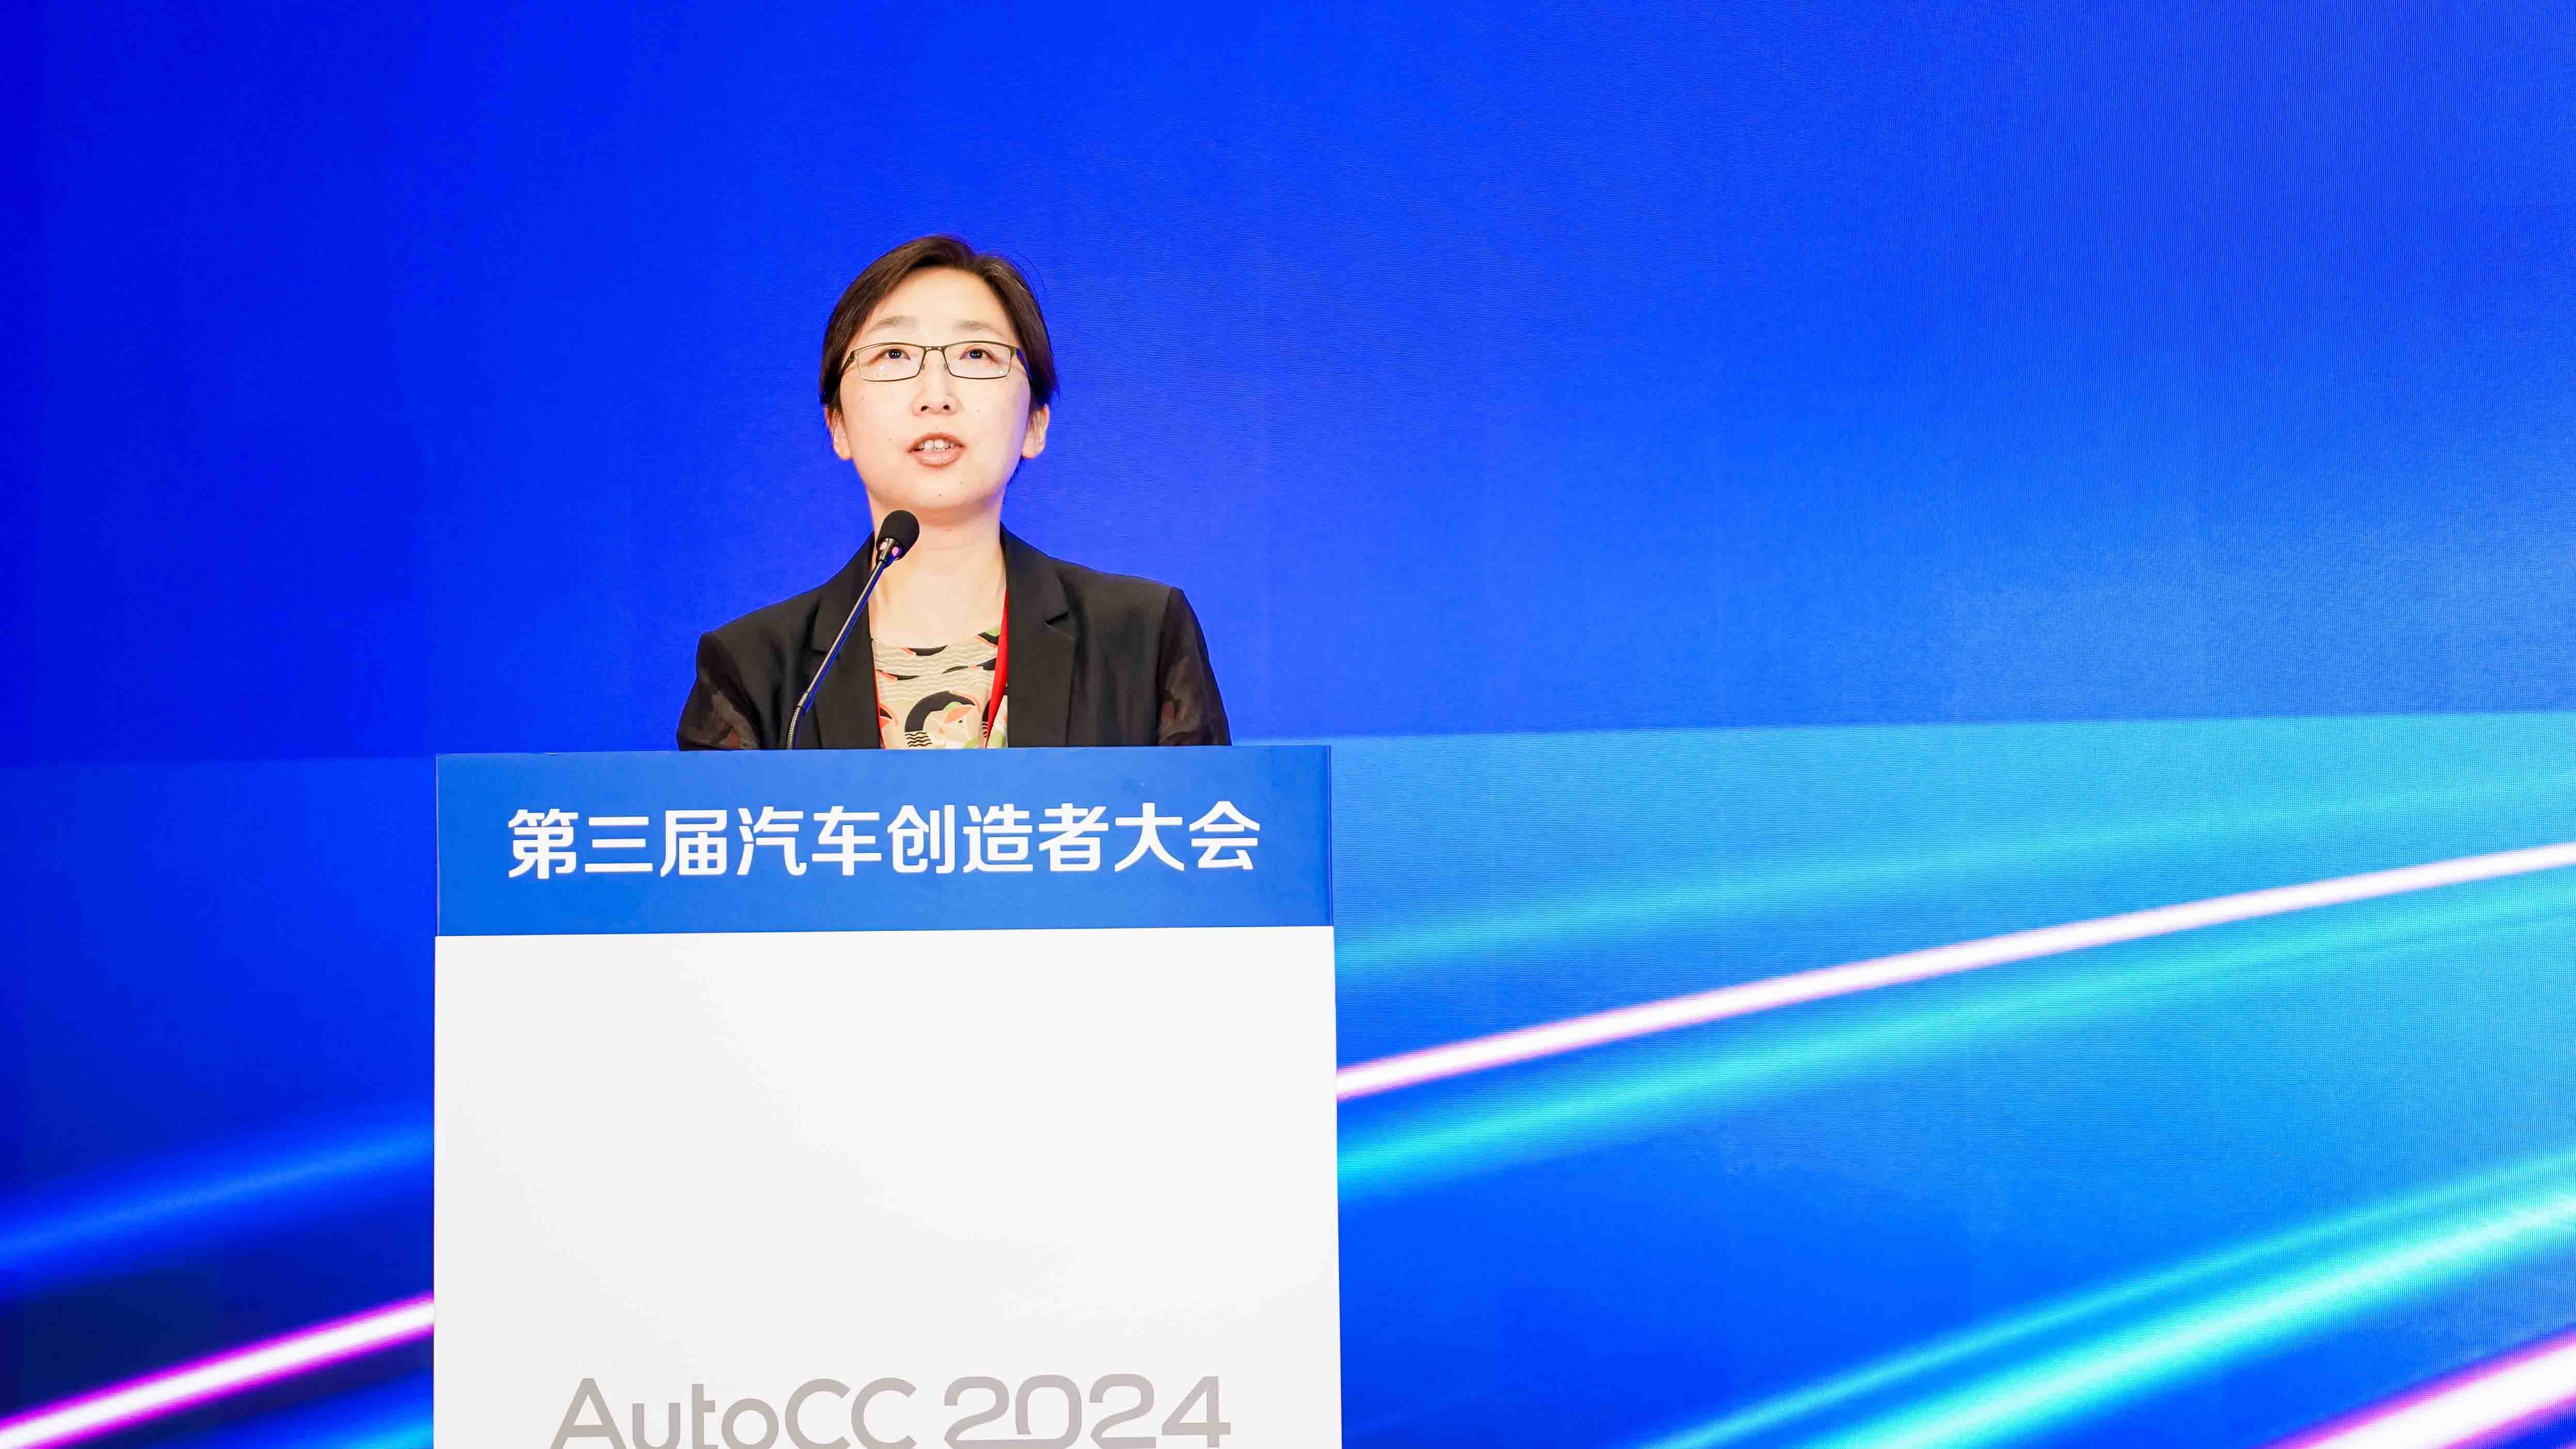 AutoCC2024 | 张凤珠：嘉定区已集聚汽车产业链相关企业4300多家，其中新汽车相关企业600余家